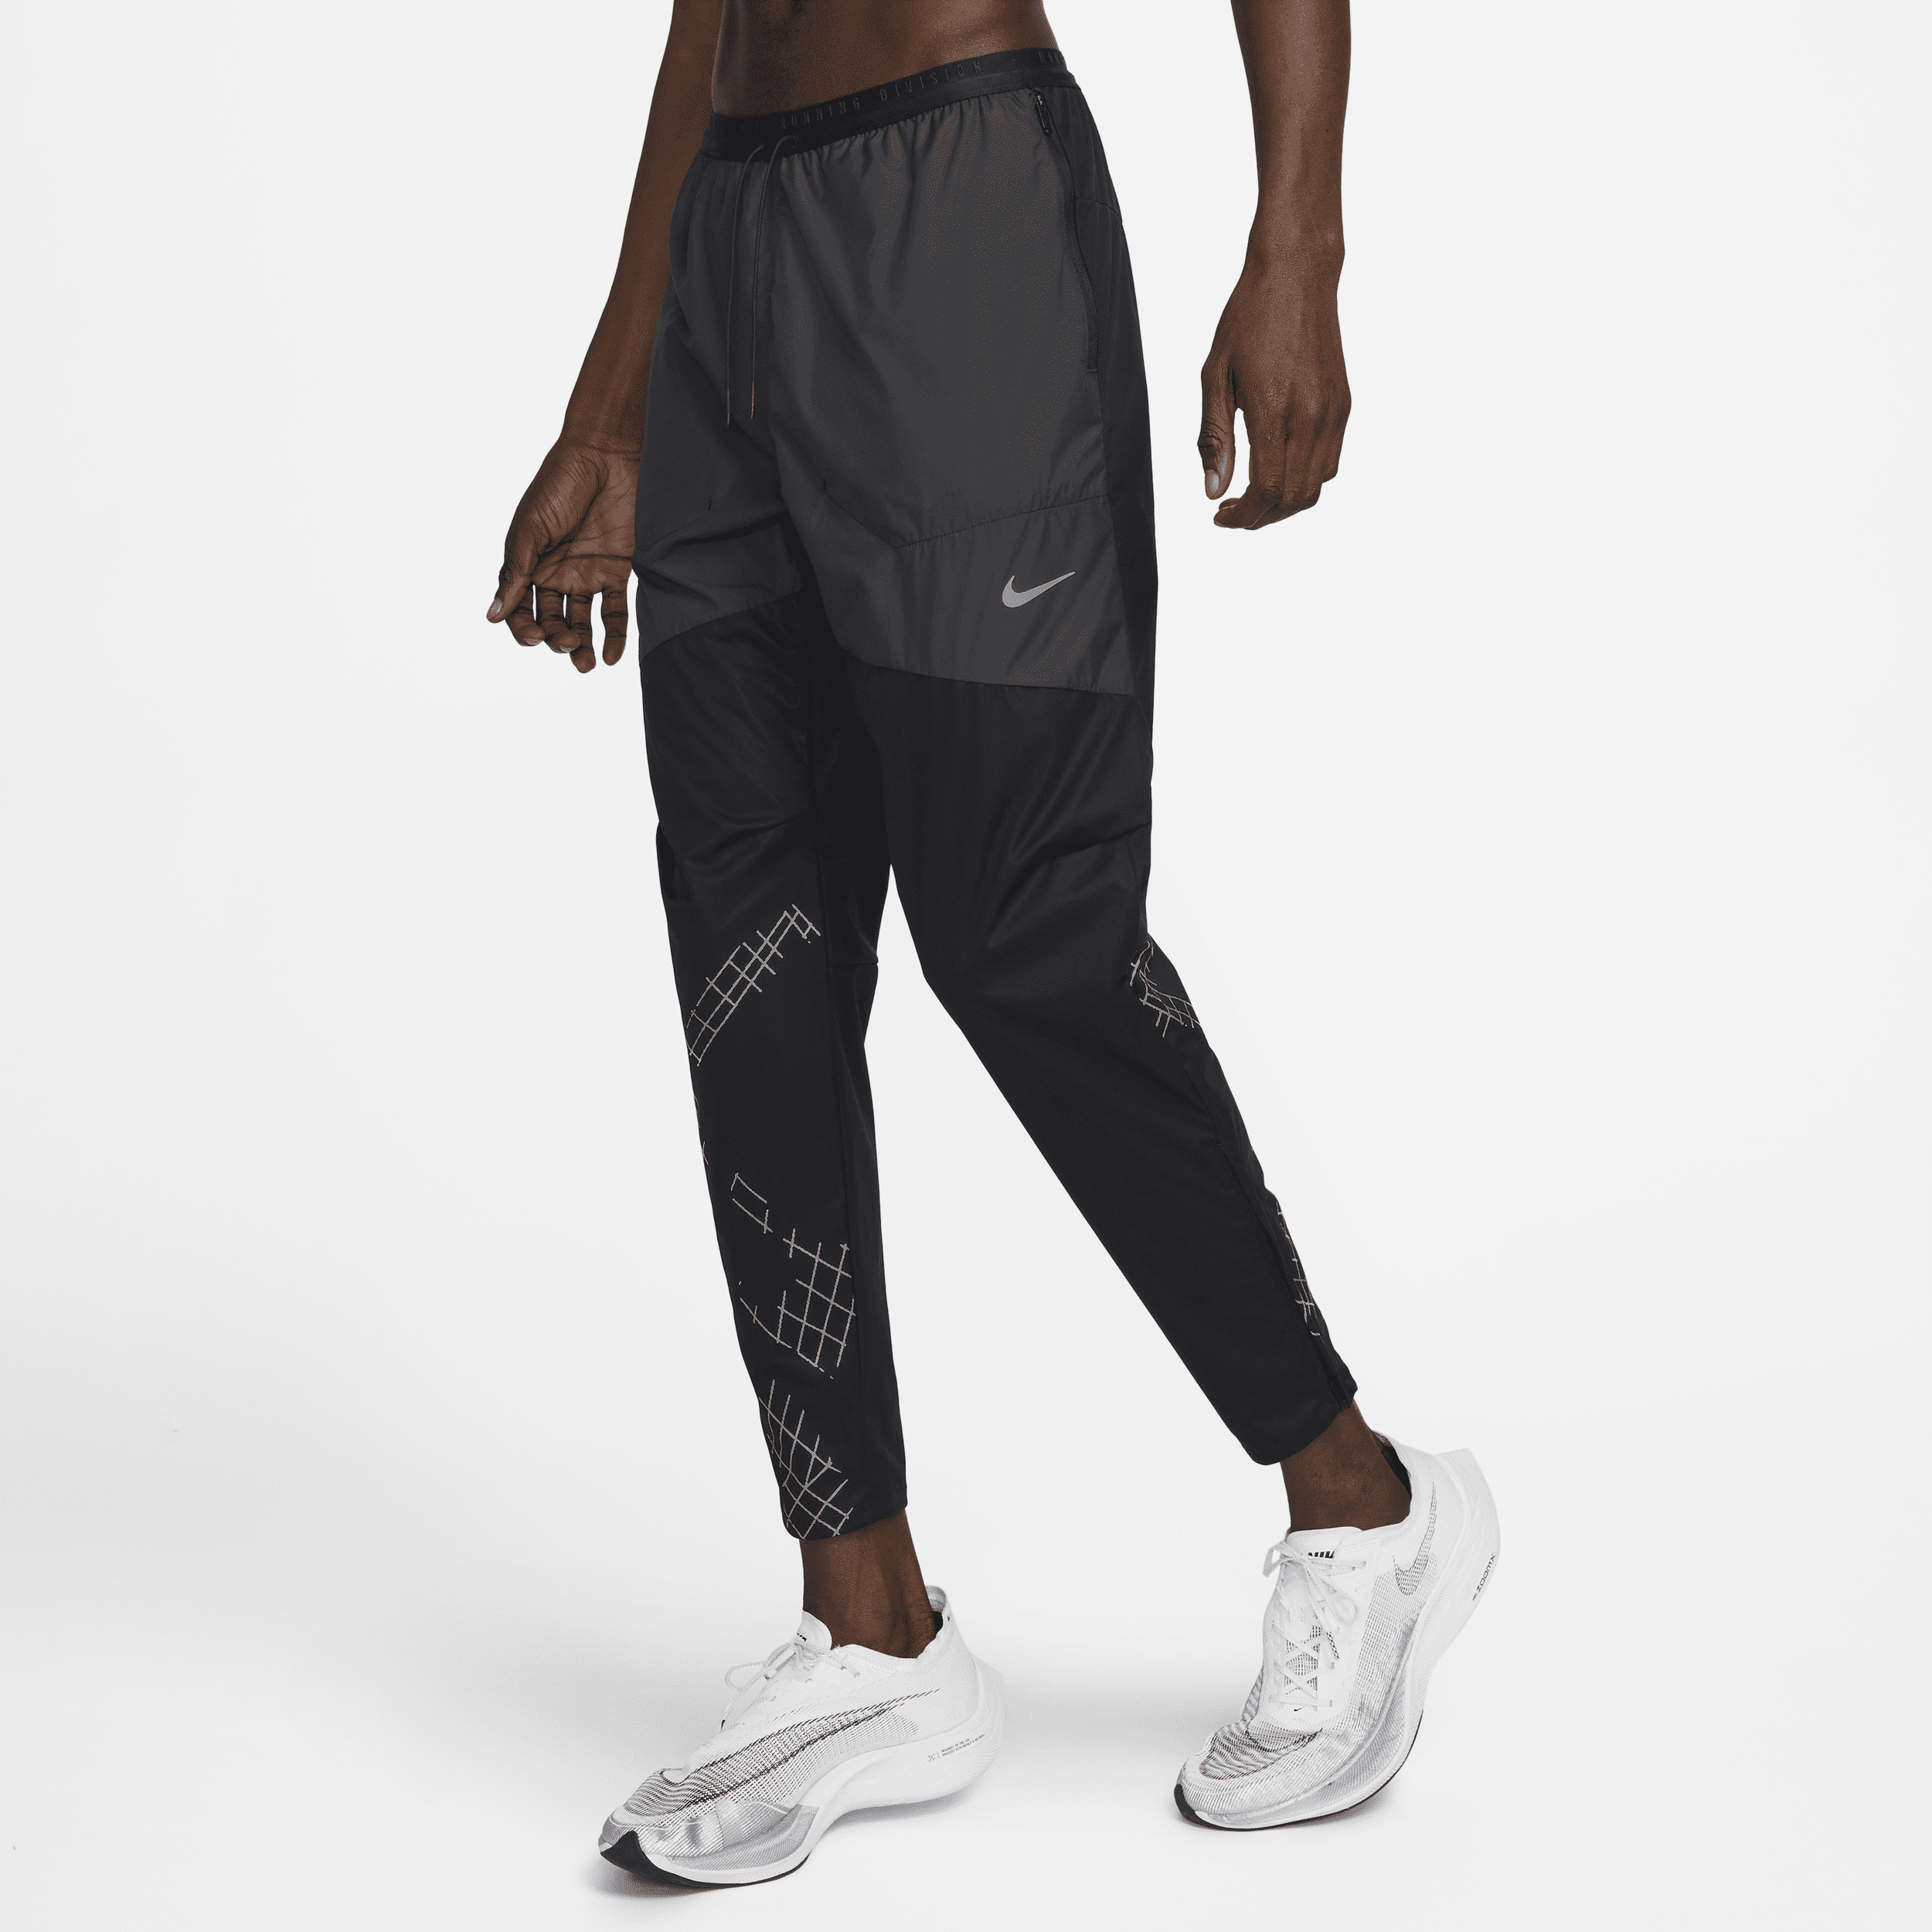 Mens Nike Phenom Knit Running Trousers Pants Size 2xl Blackreflect for  sale online  eBay